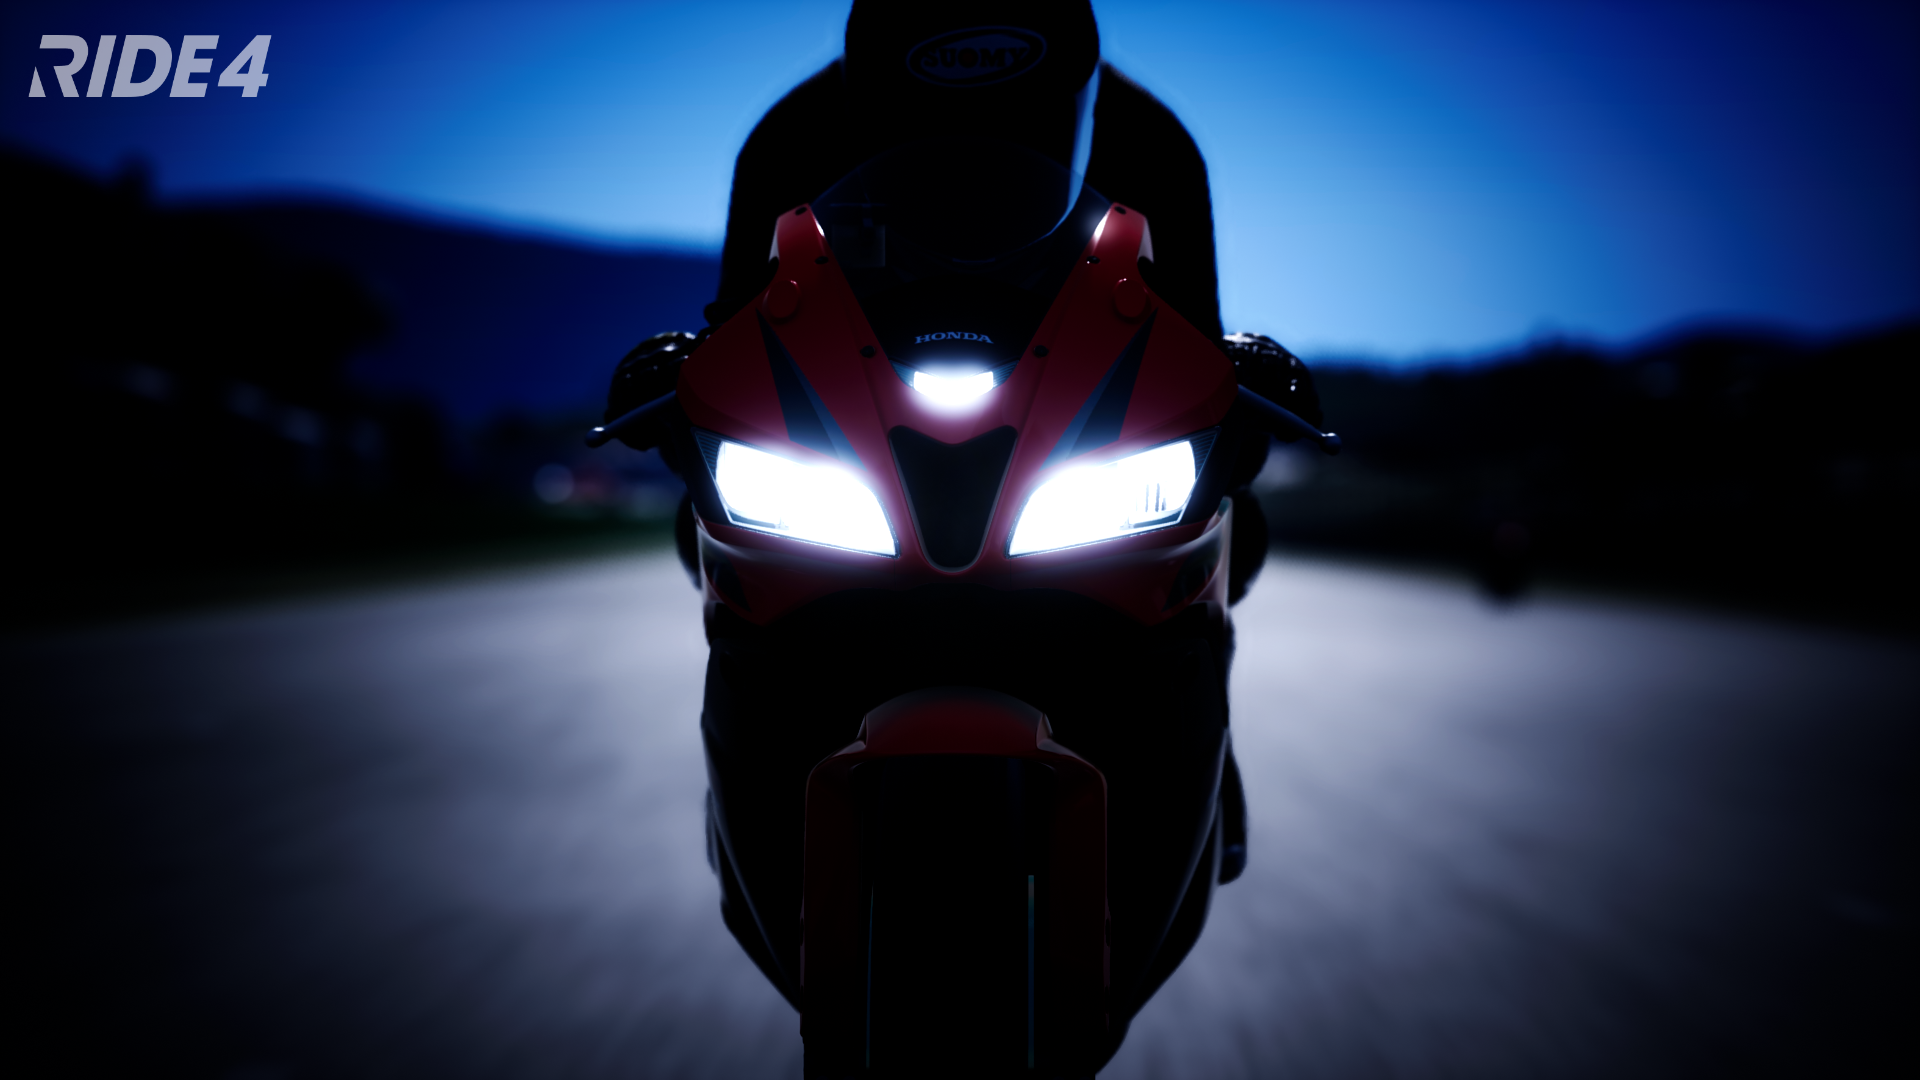 Motorsport Motorcycle Video Games Vehicle Headlights Race Tracks RiDE 4 Screen Shot 1920x1080